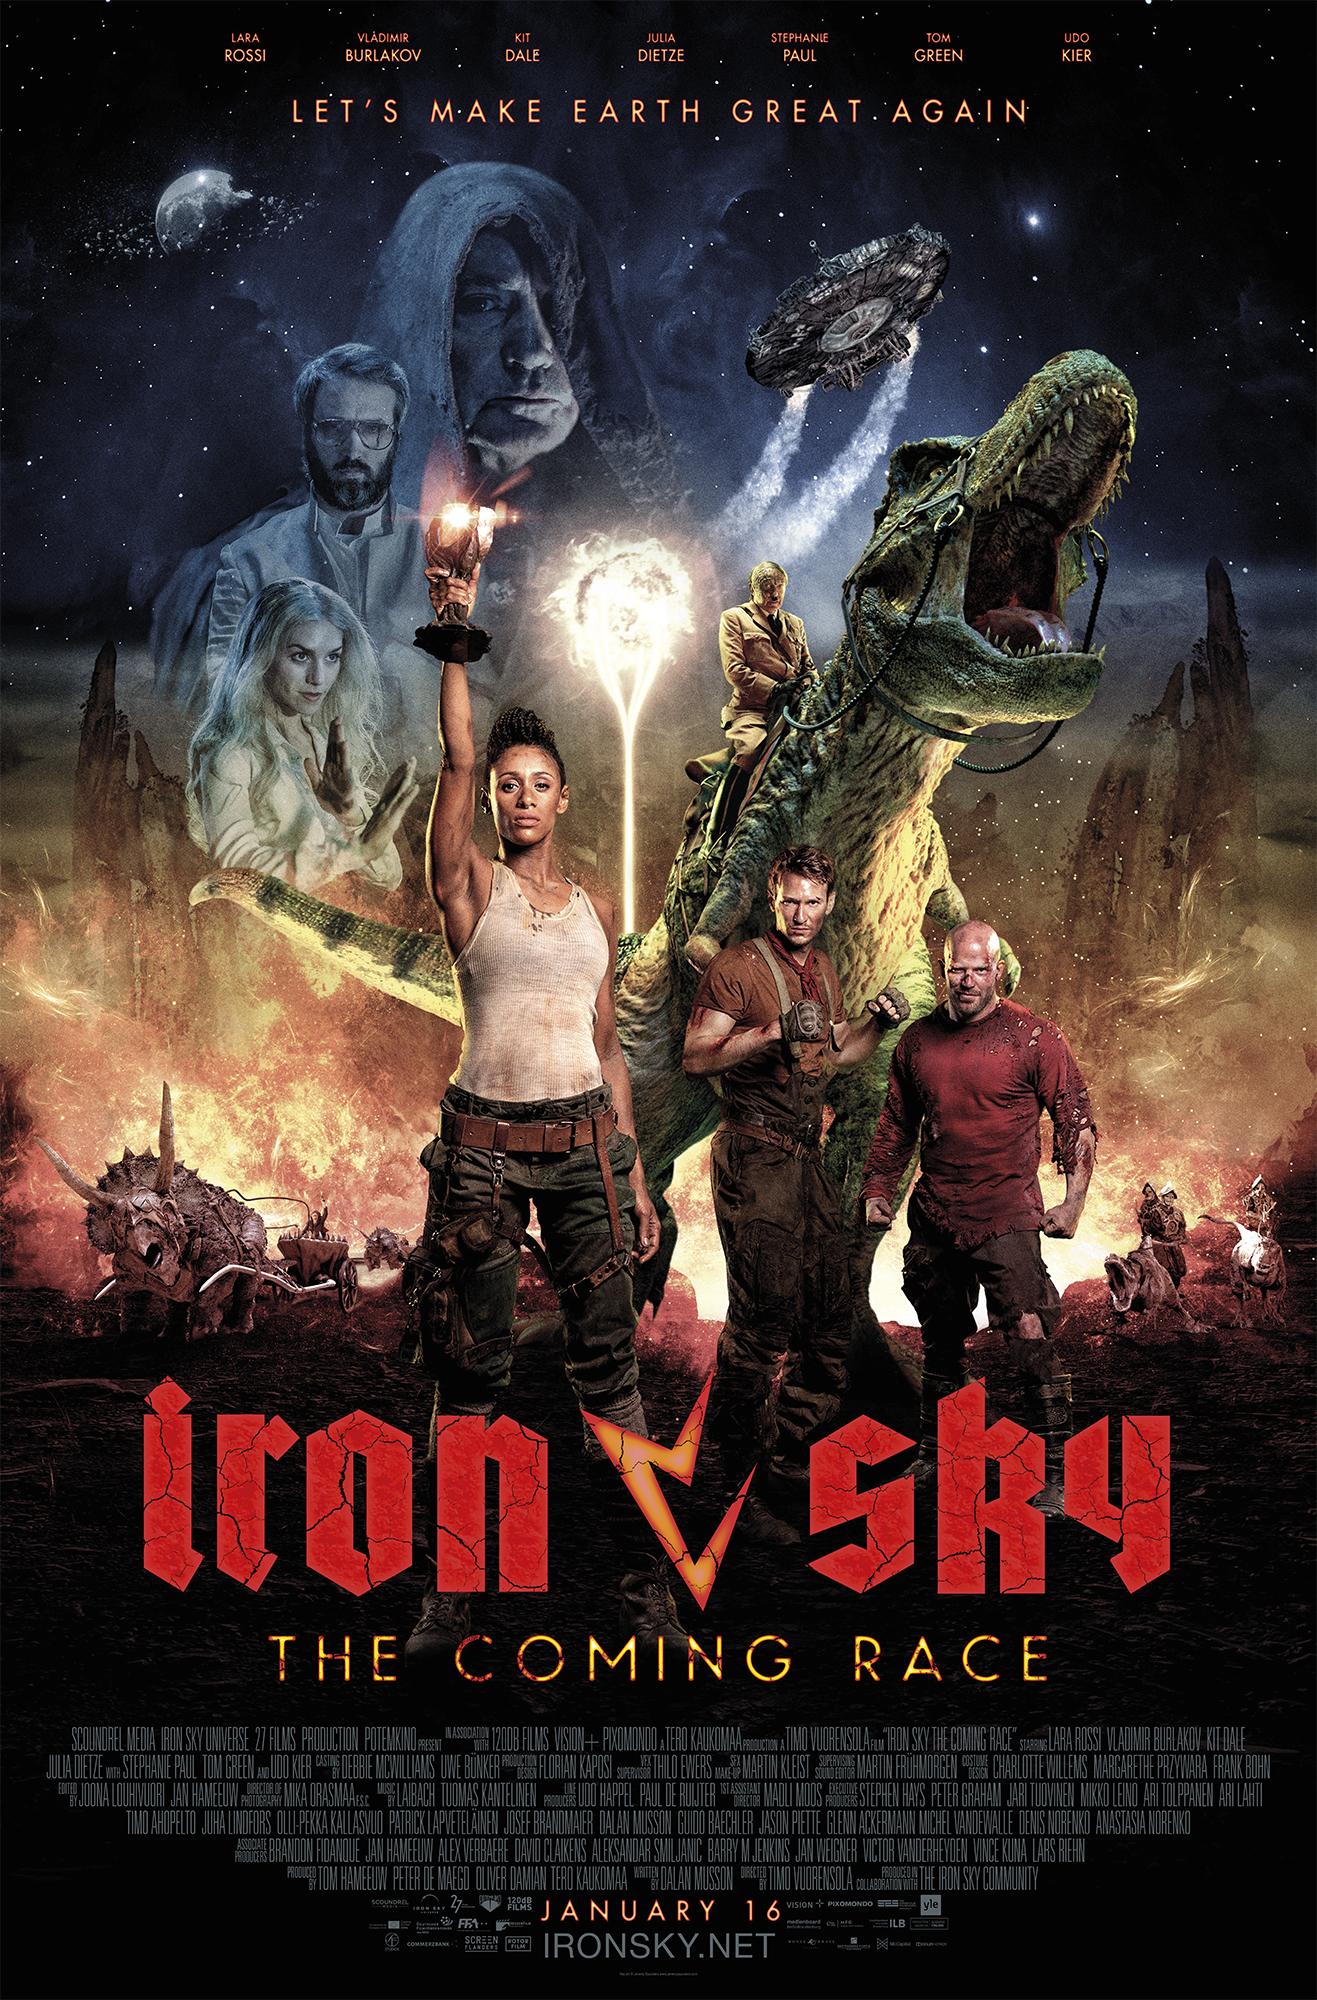 Stiahni si Filmy s titulkama     Iron Sky: The Coming Race (2019) = CSFD 50%